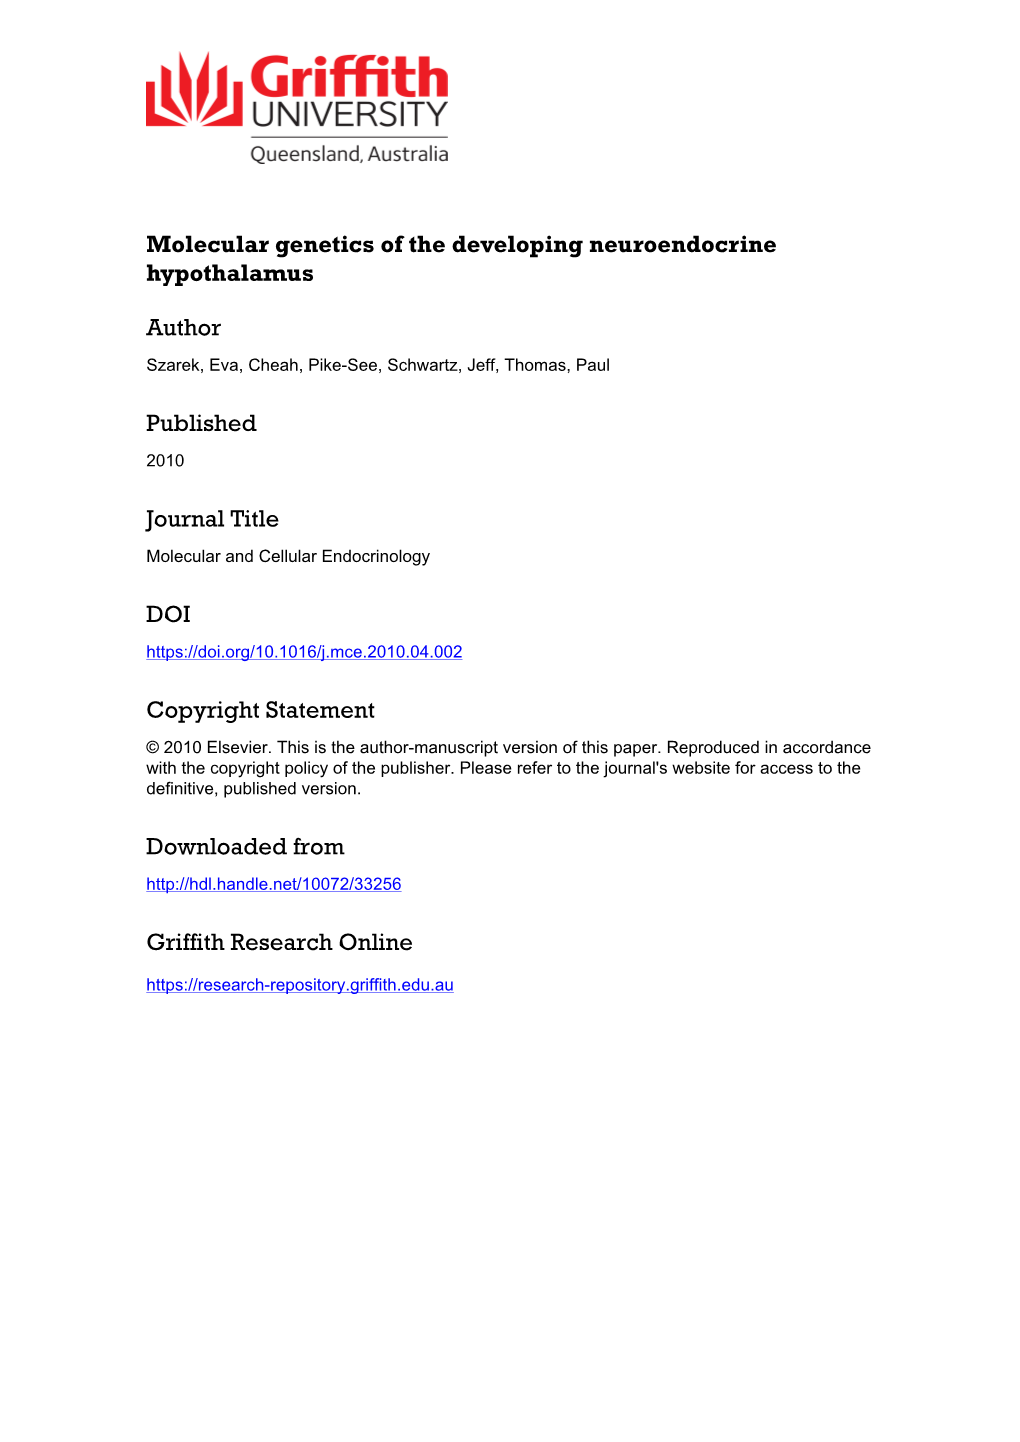 Molecular Genetics of Neuroendocrine Hypothalamic Development OR